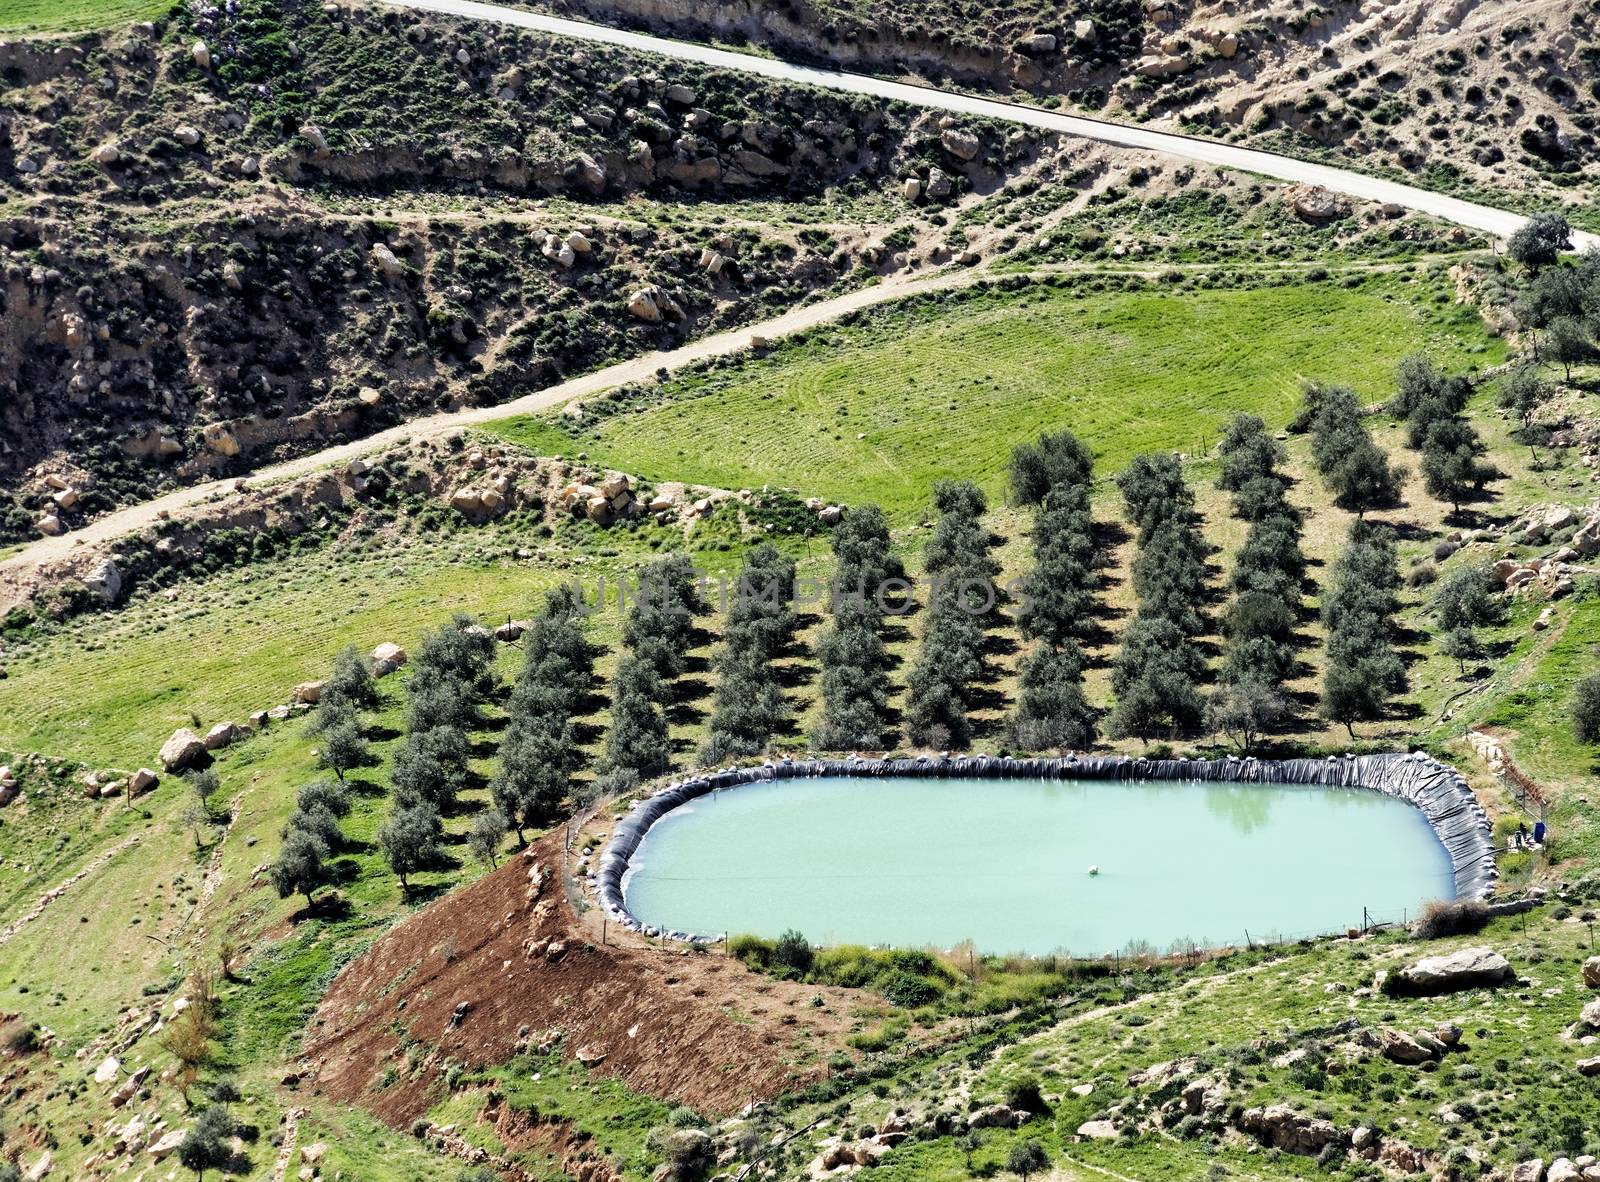 Storage basin for the irrigation of an olive grove in the desert near Karak, Jordan by geogif